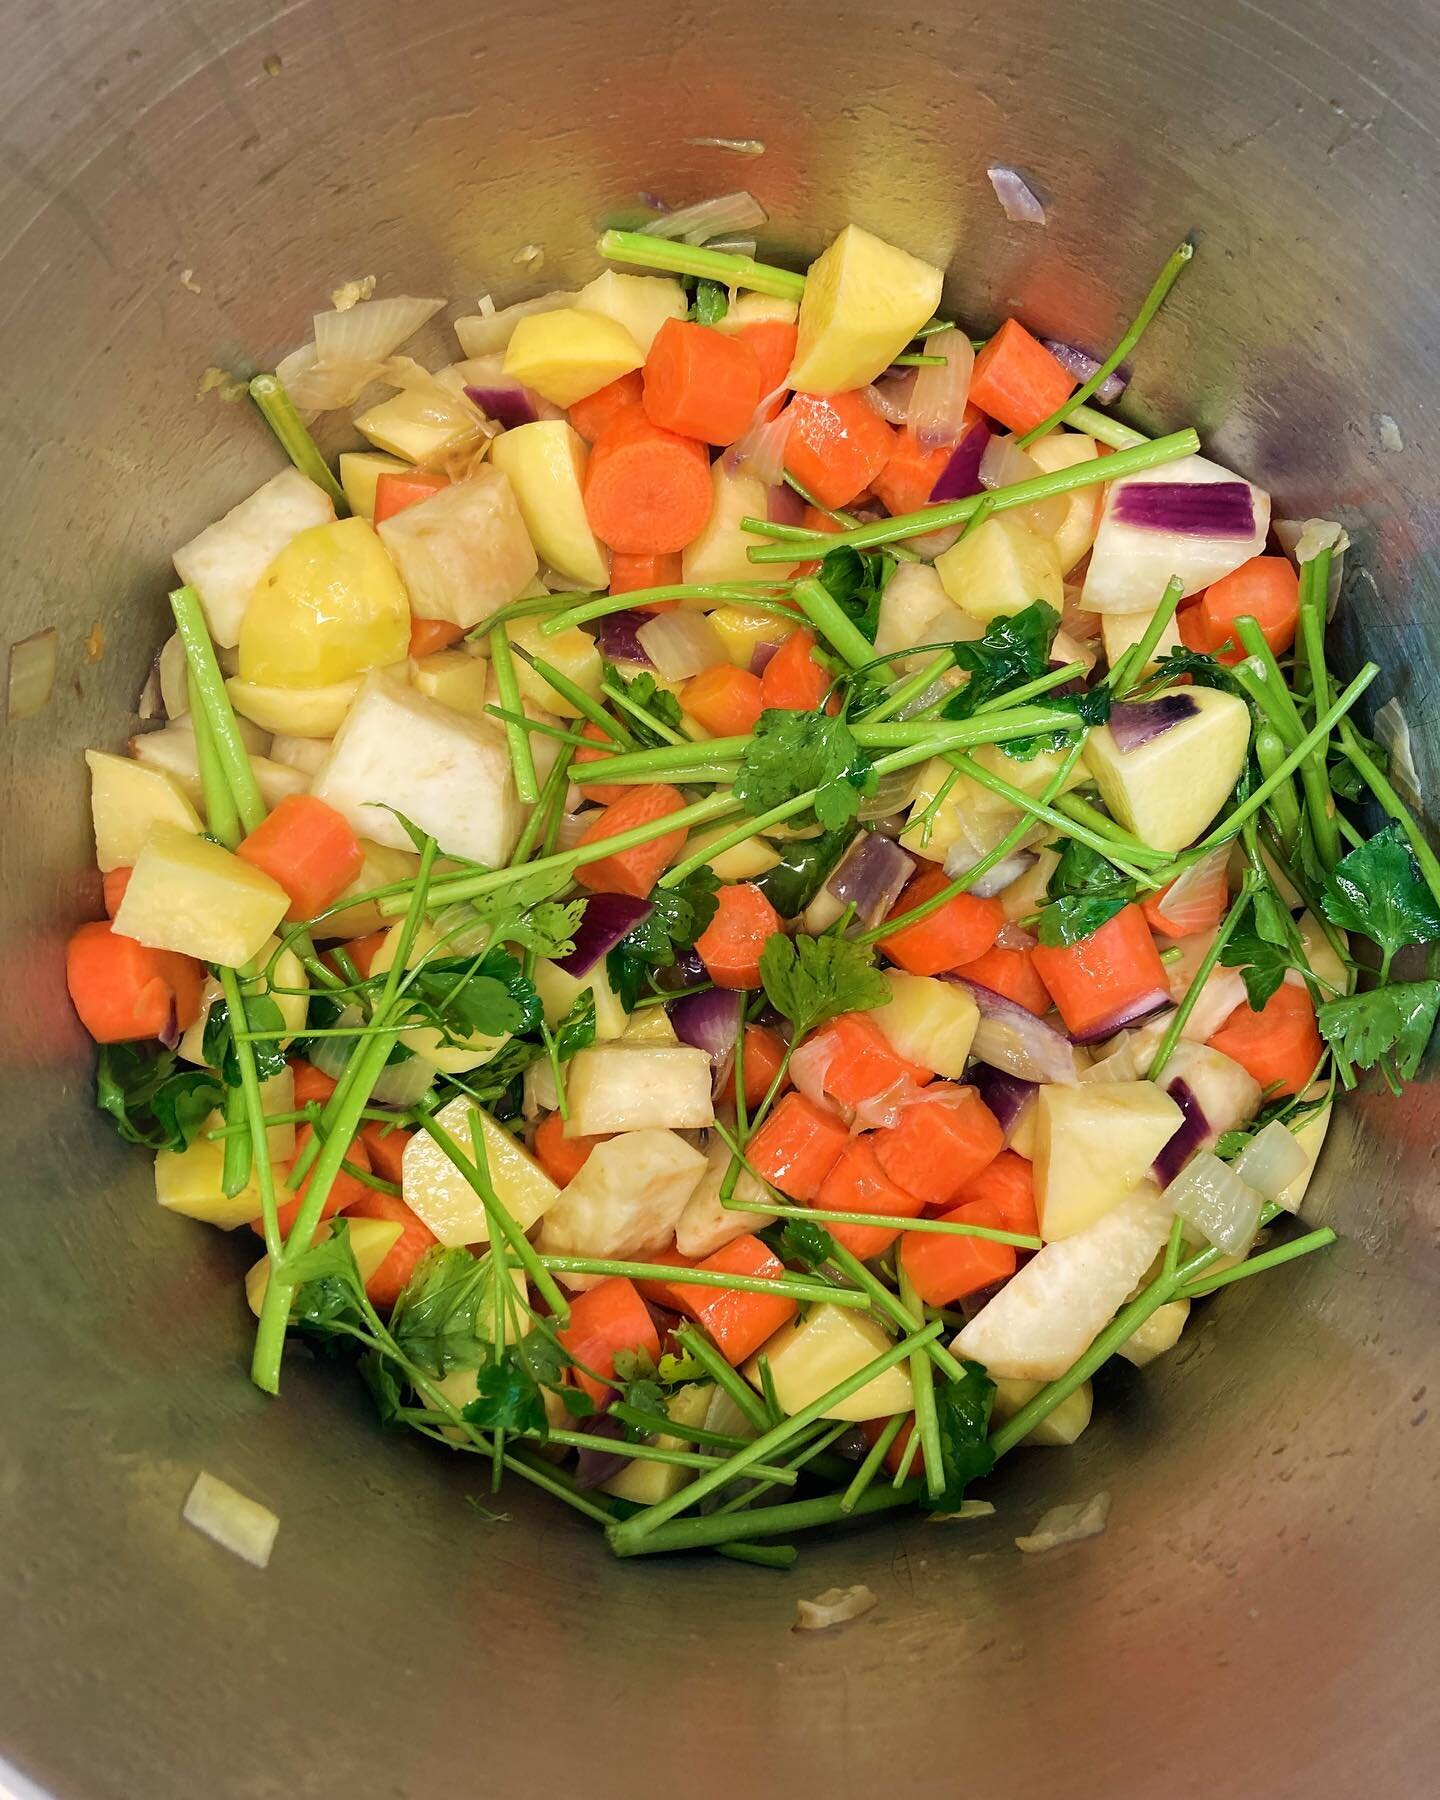 Every day&rsquo;s fresh vegetables soup in #pinsae28 #einsteinstrasse28